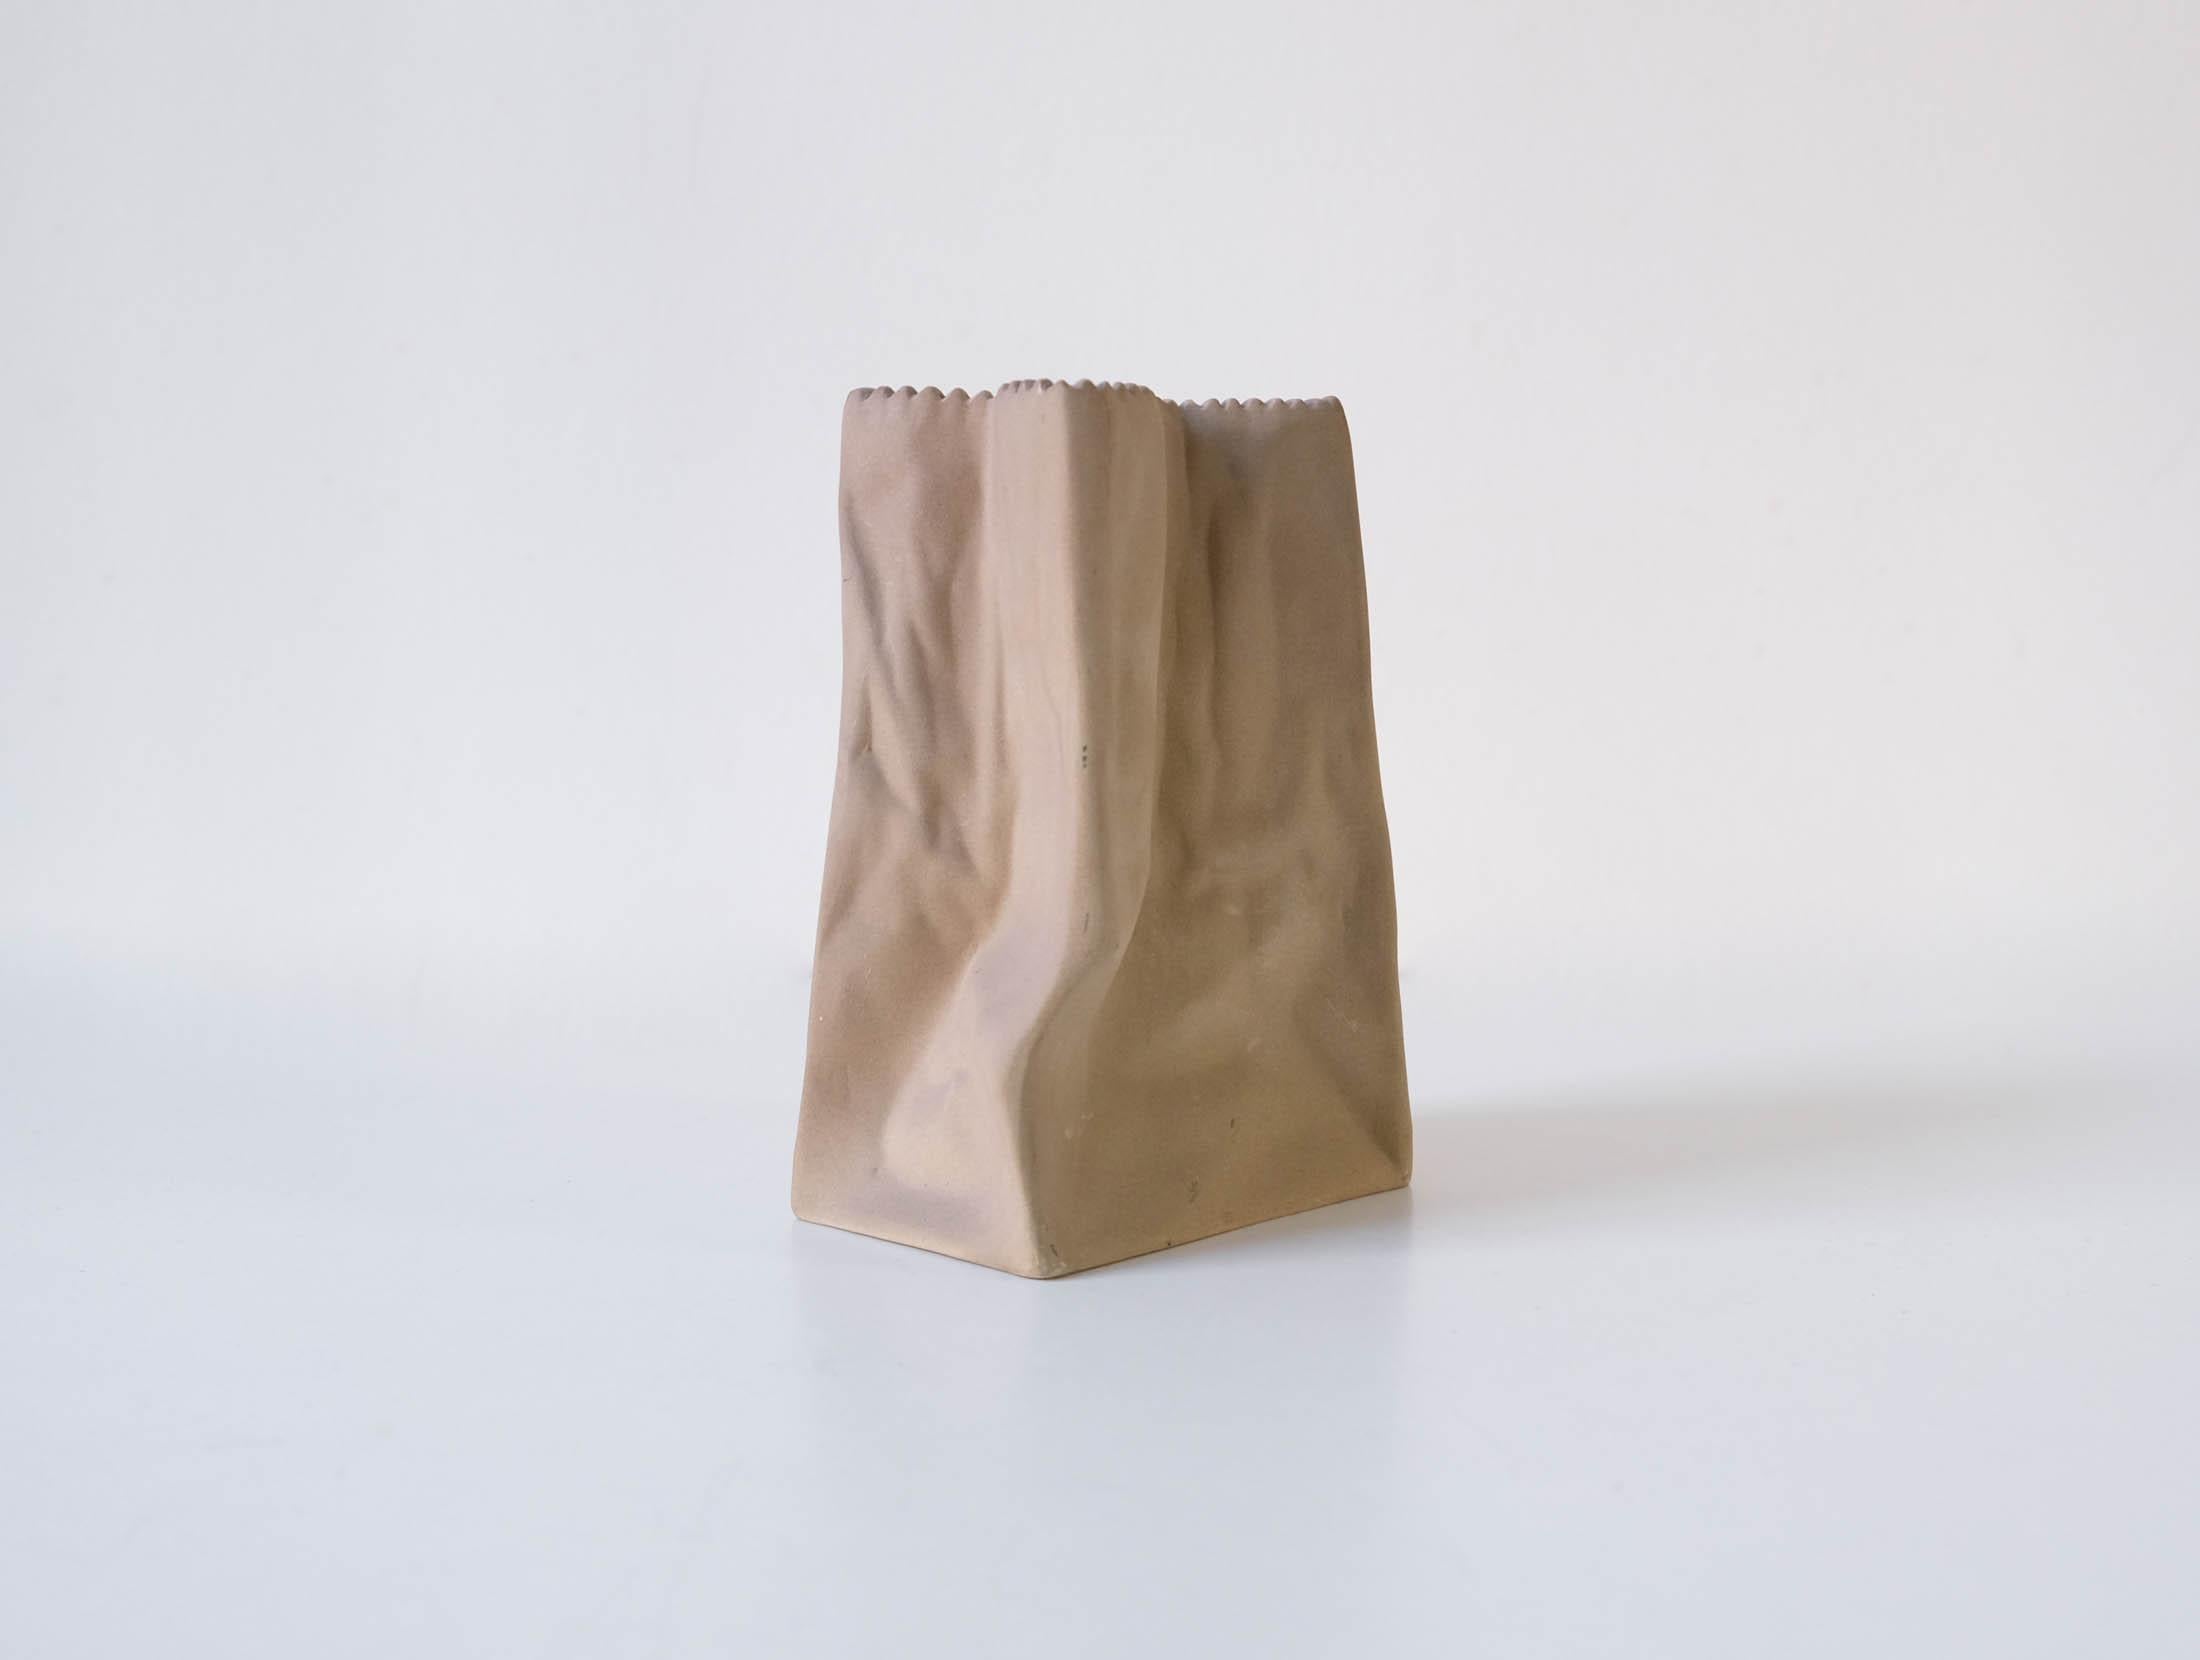 For sale an iconic Pop Art porcelain “Paper Bag